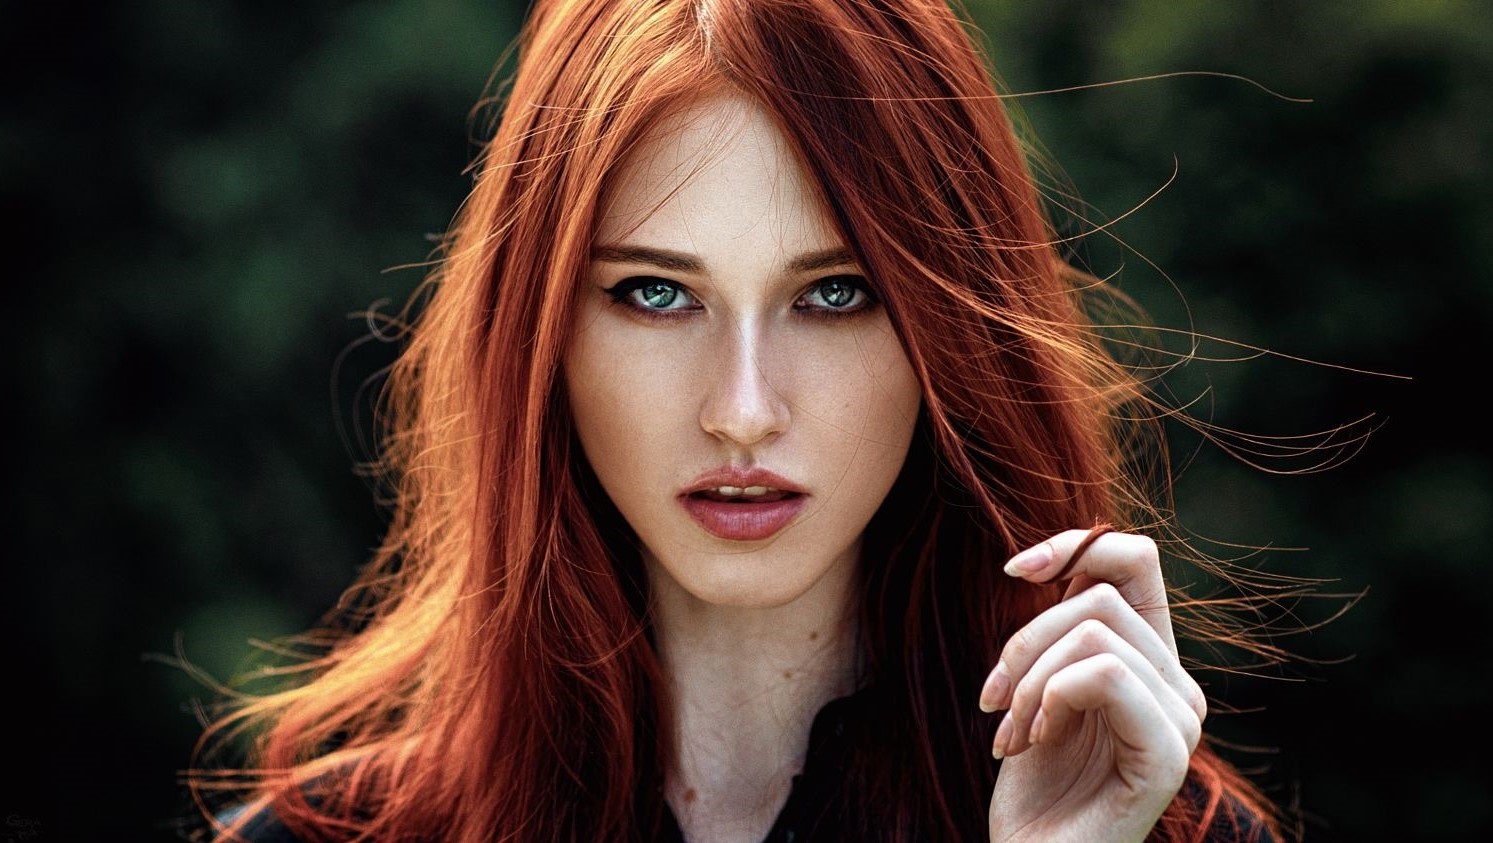 People 1493x843 women model redhead hands in hair eyes